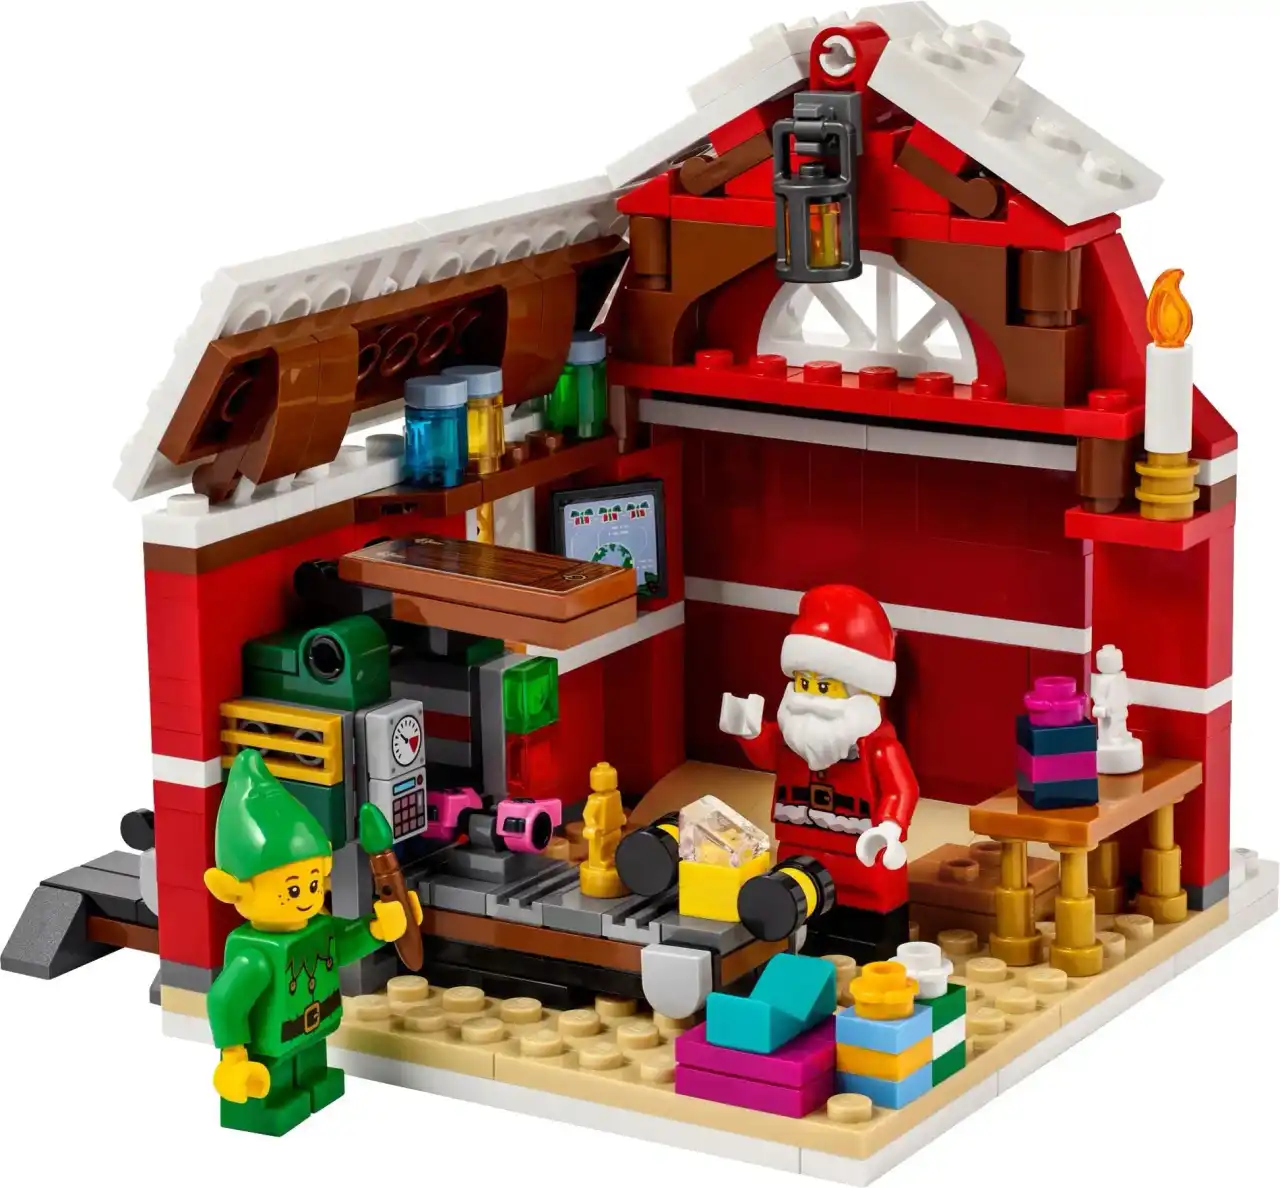 40565 - Santa's Workshop